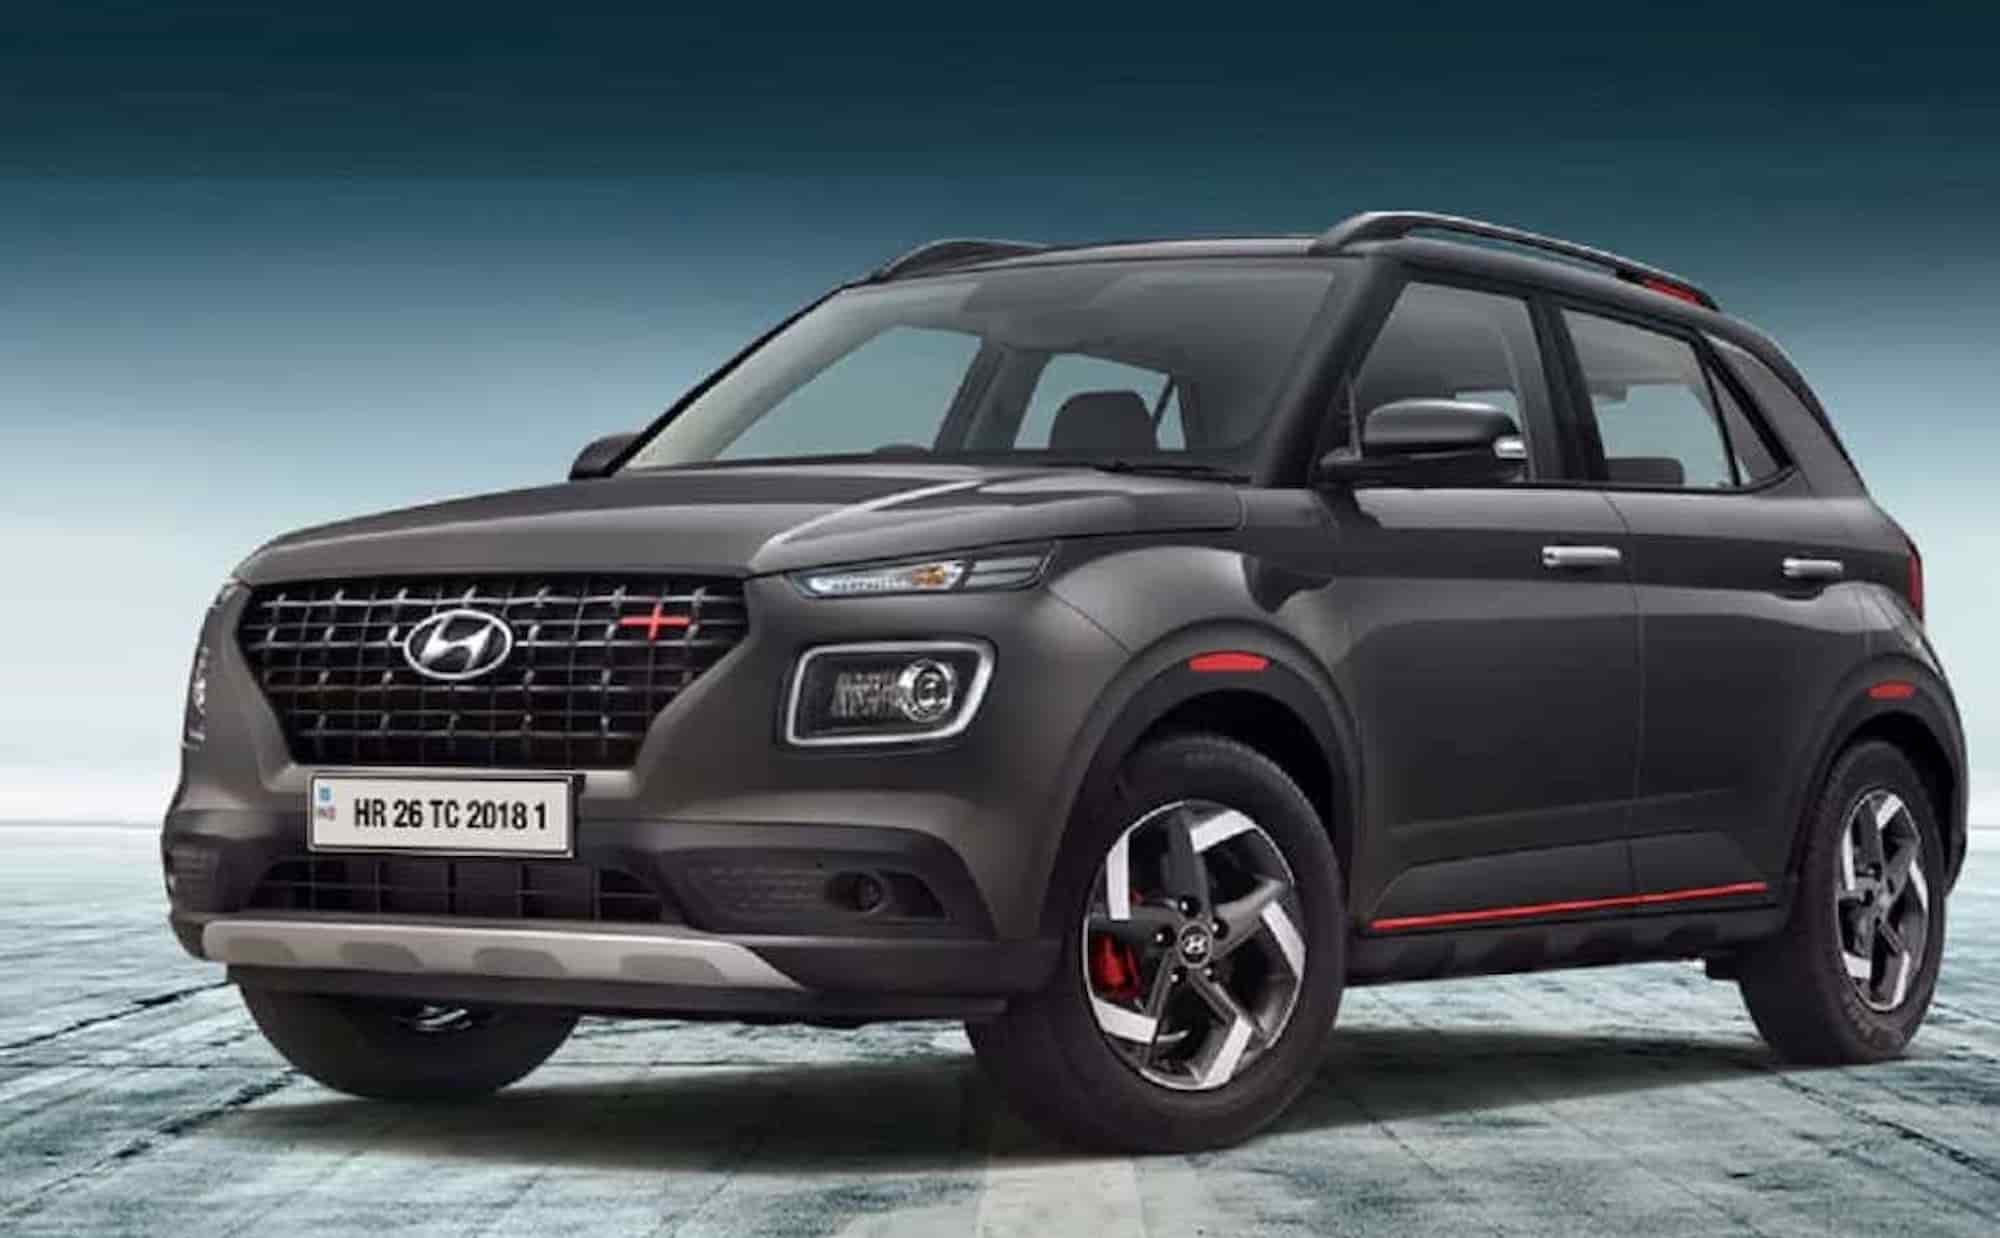 Hyundai Venue New Price List